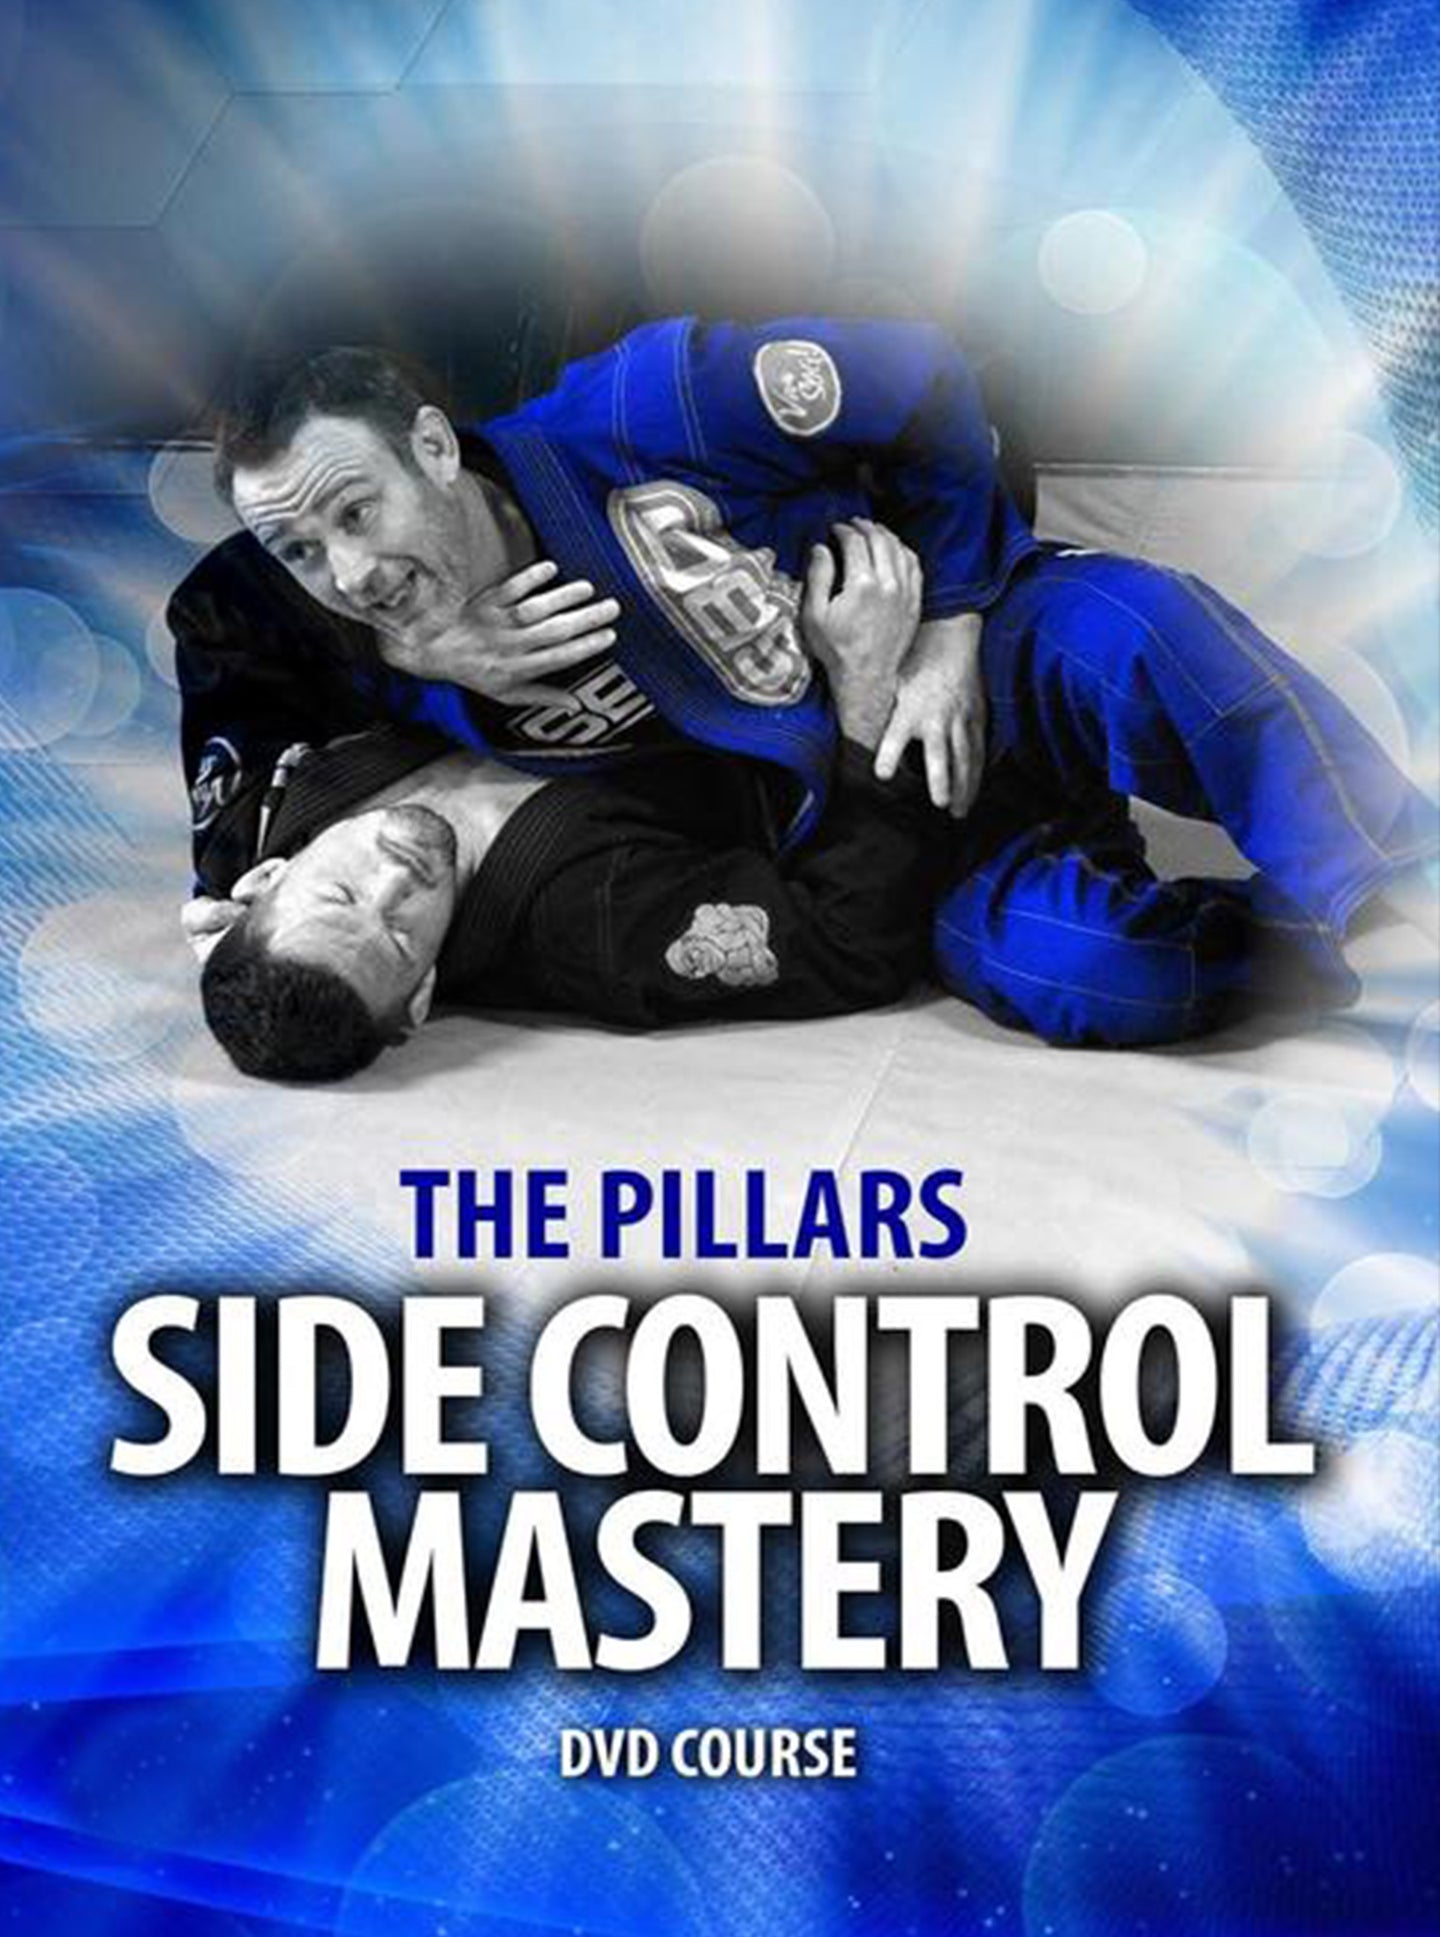 The Pillars Side Control Mastery by Stephen Whittier - BJJ Fanatics